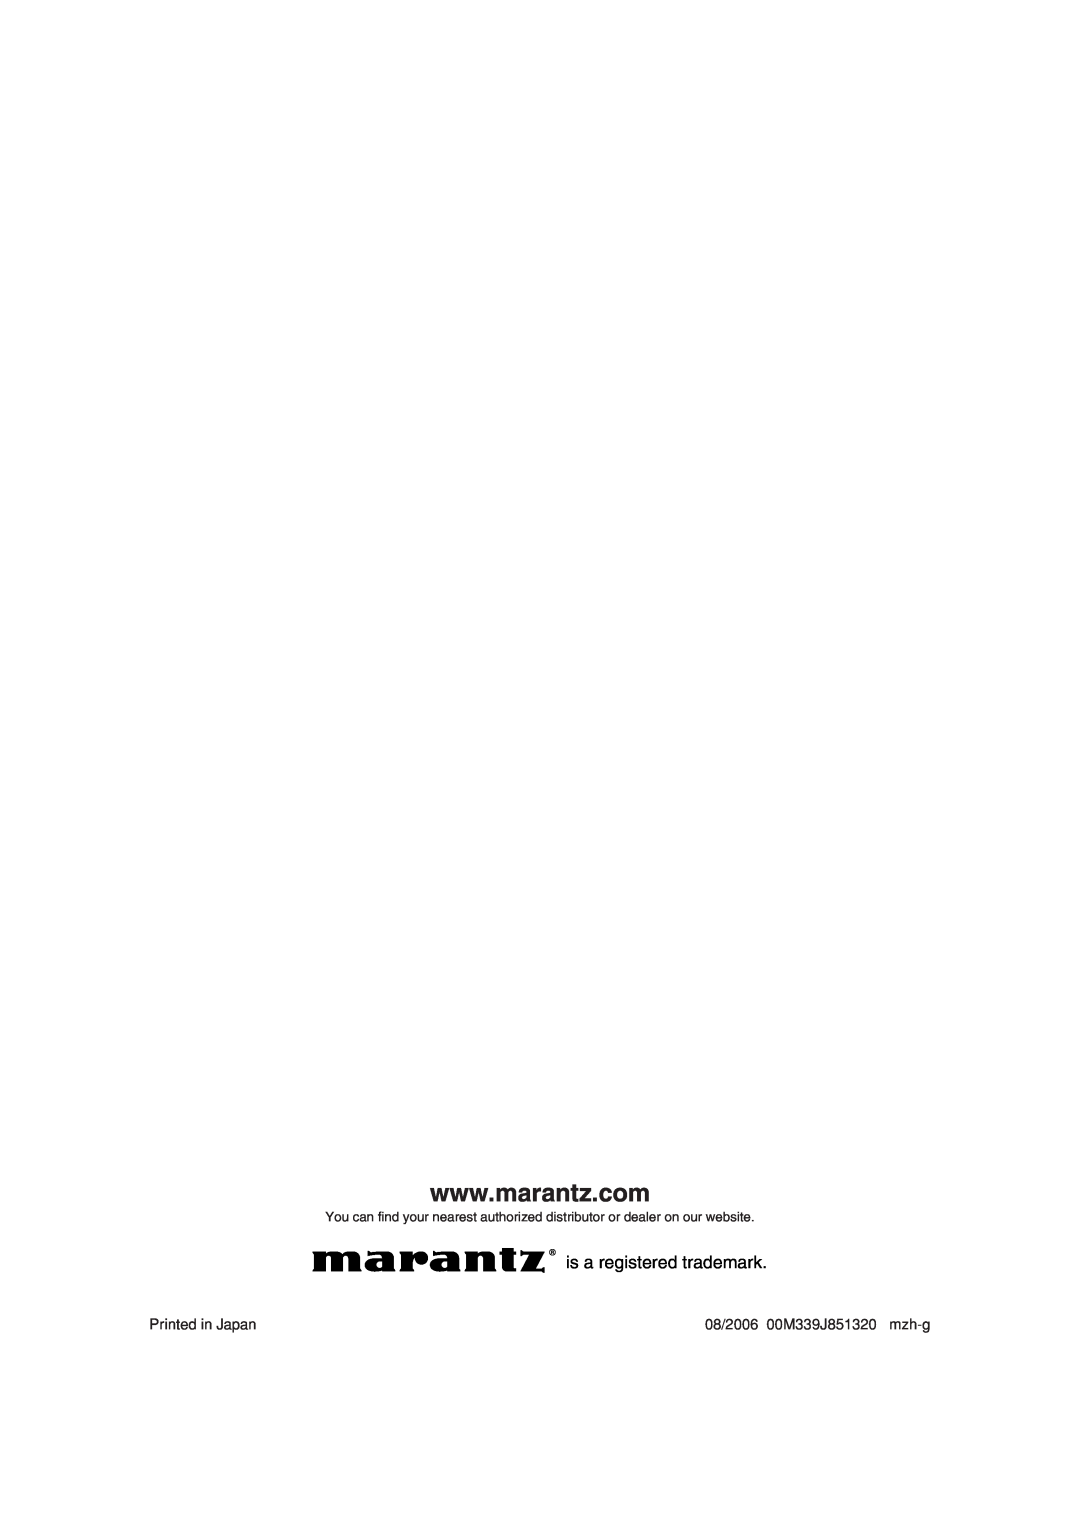 Marantz MA-9S2 manual is a registered trademark 